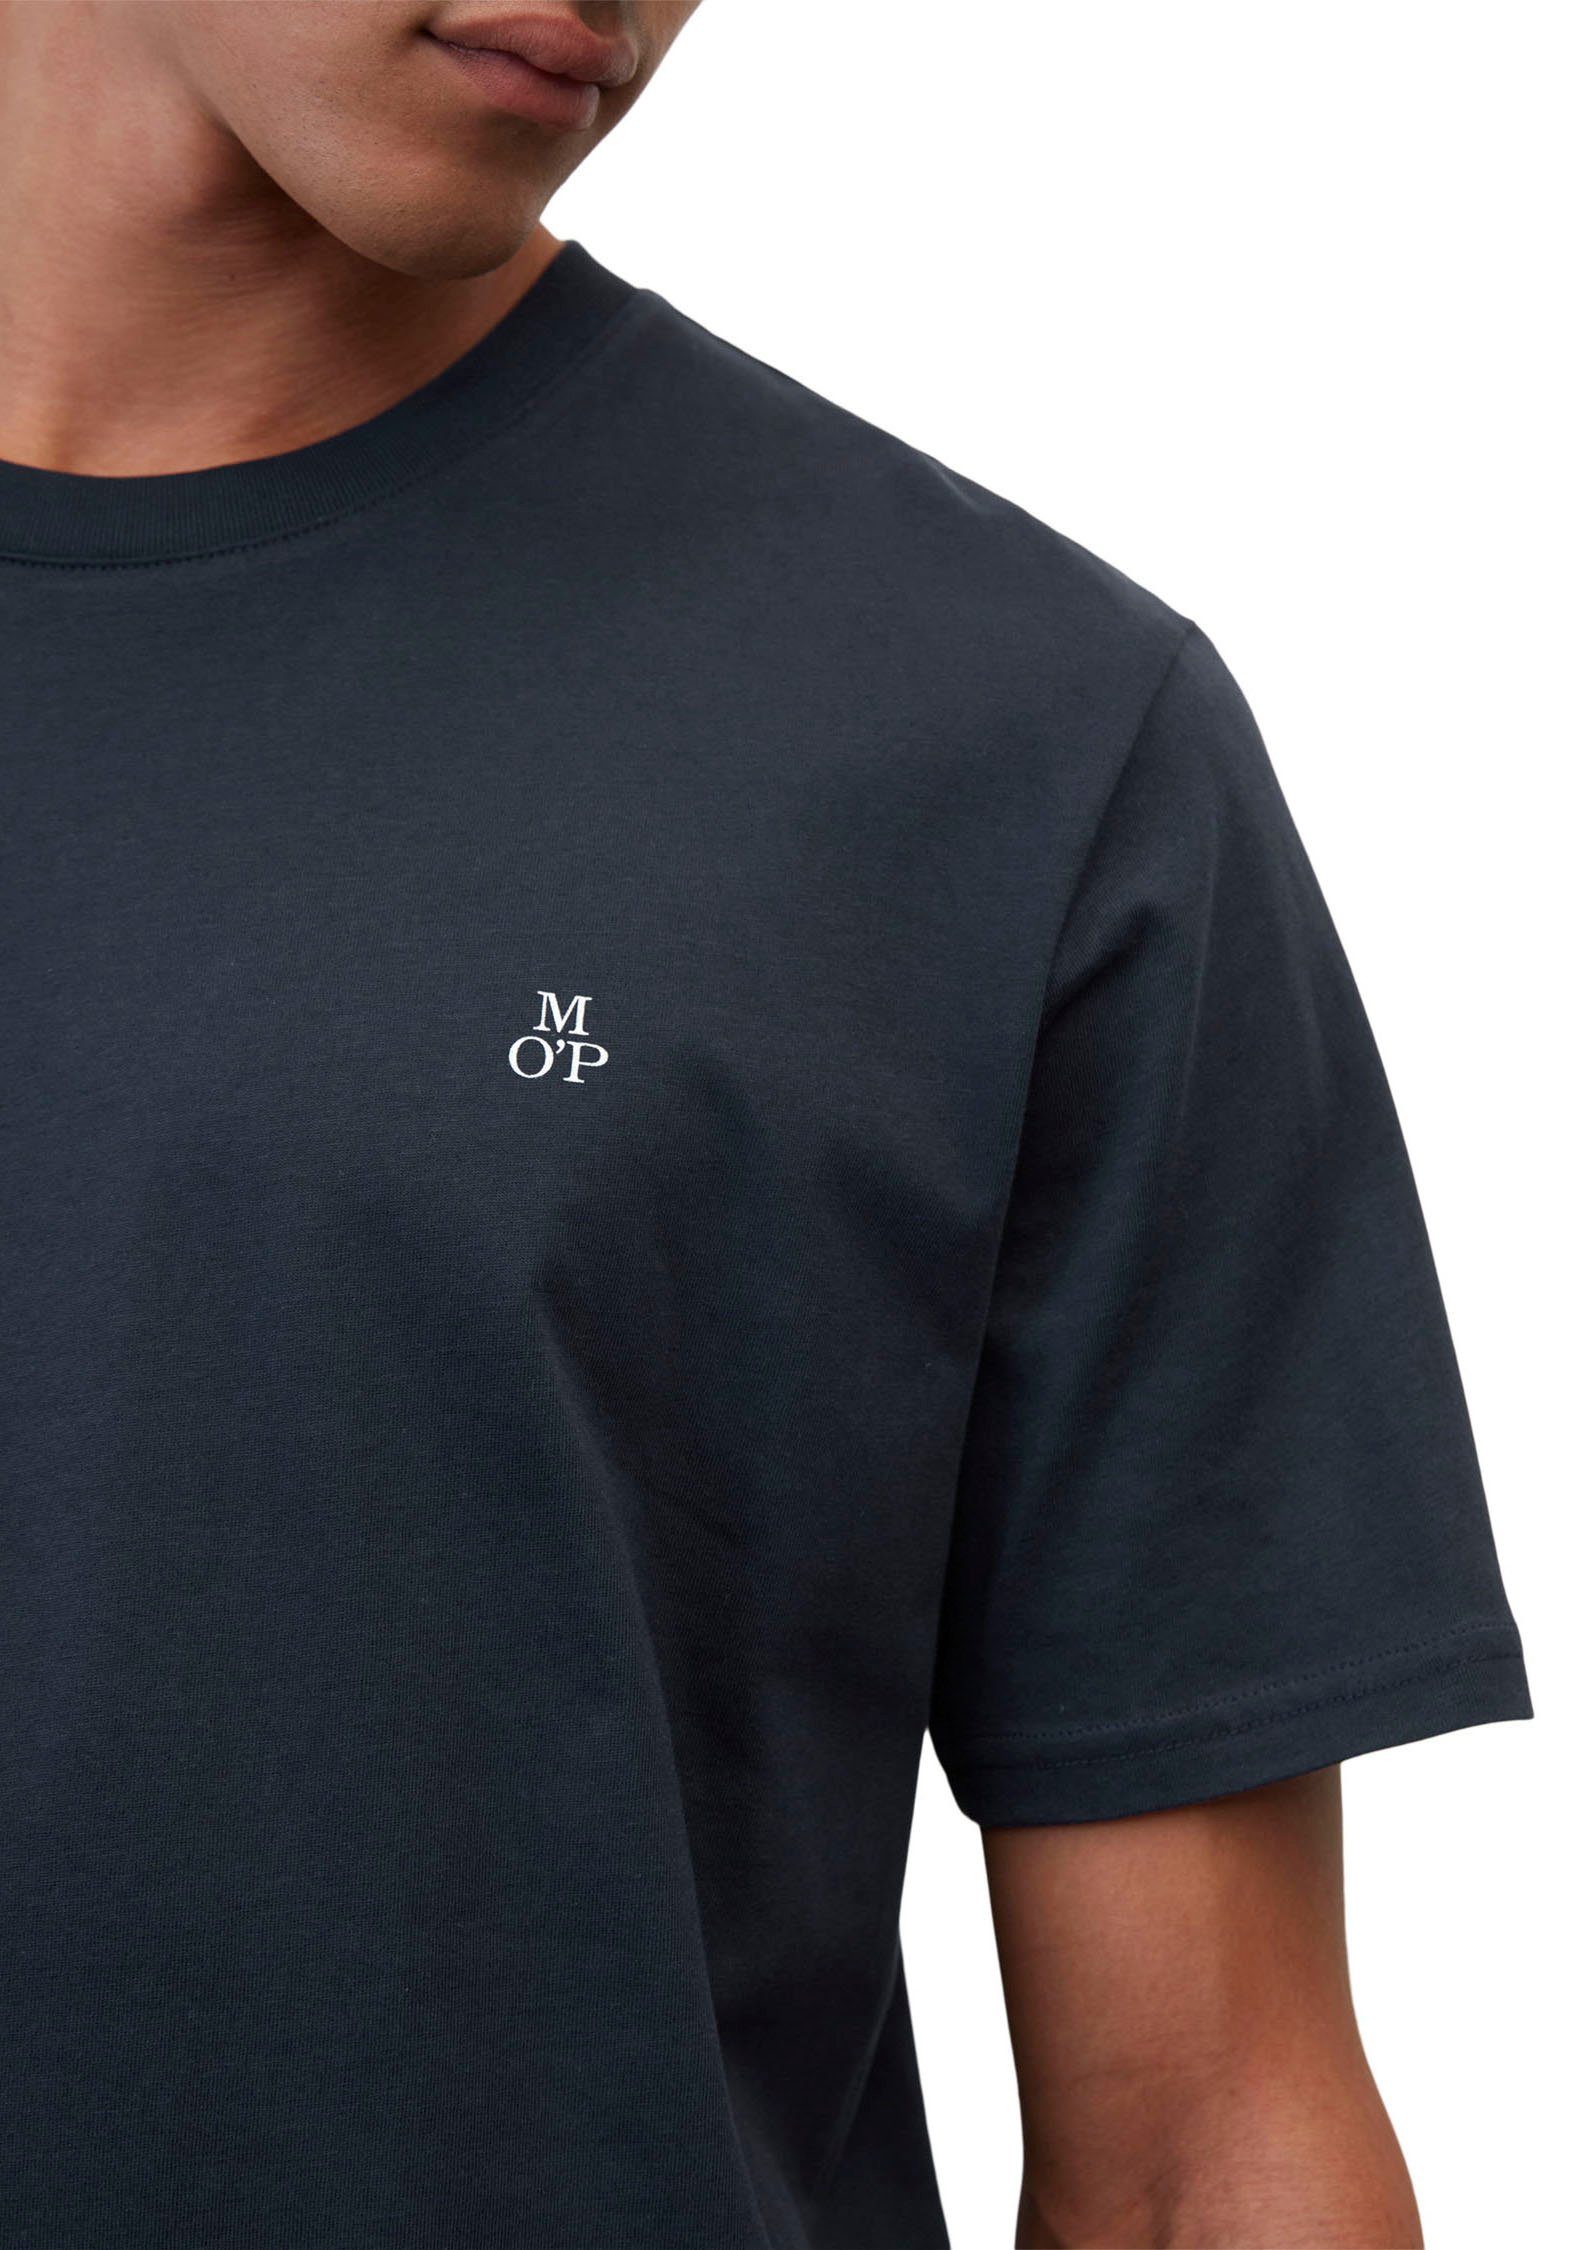 Logo-T-Shirt dark T-Shirt O'Polo night Marc Bio-Baumwolle aus